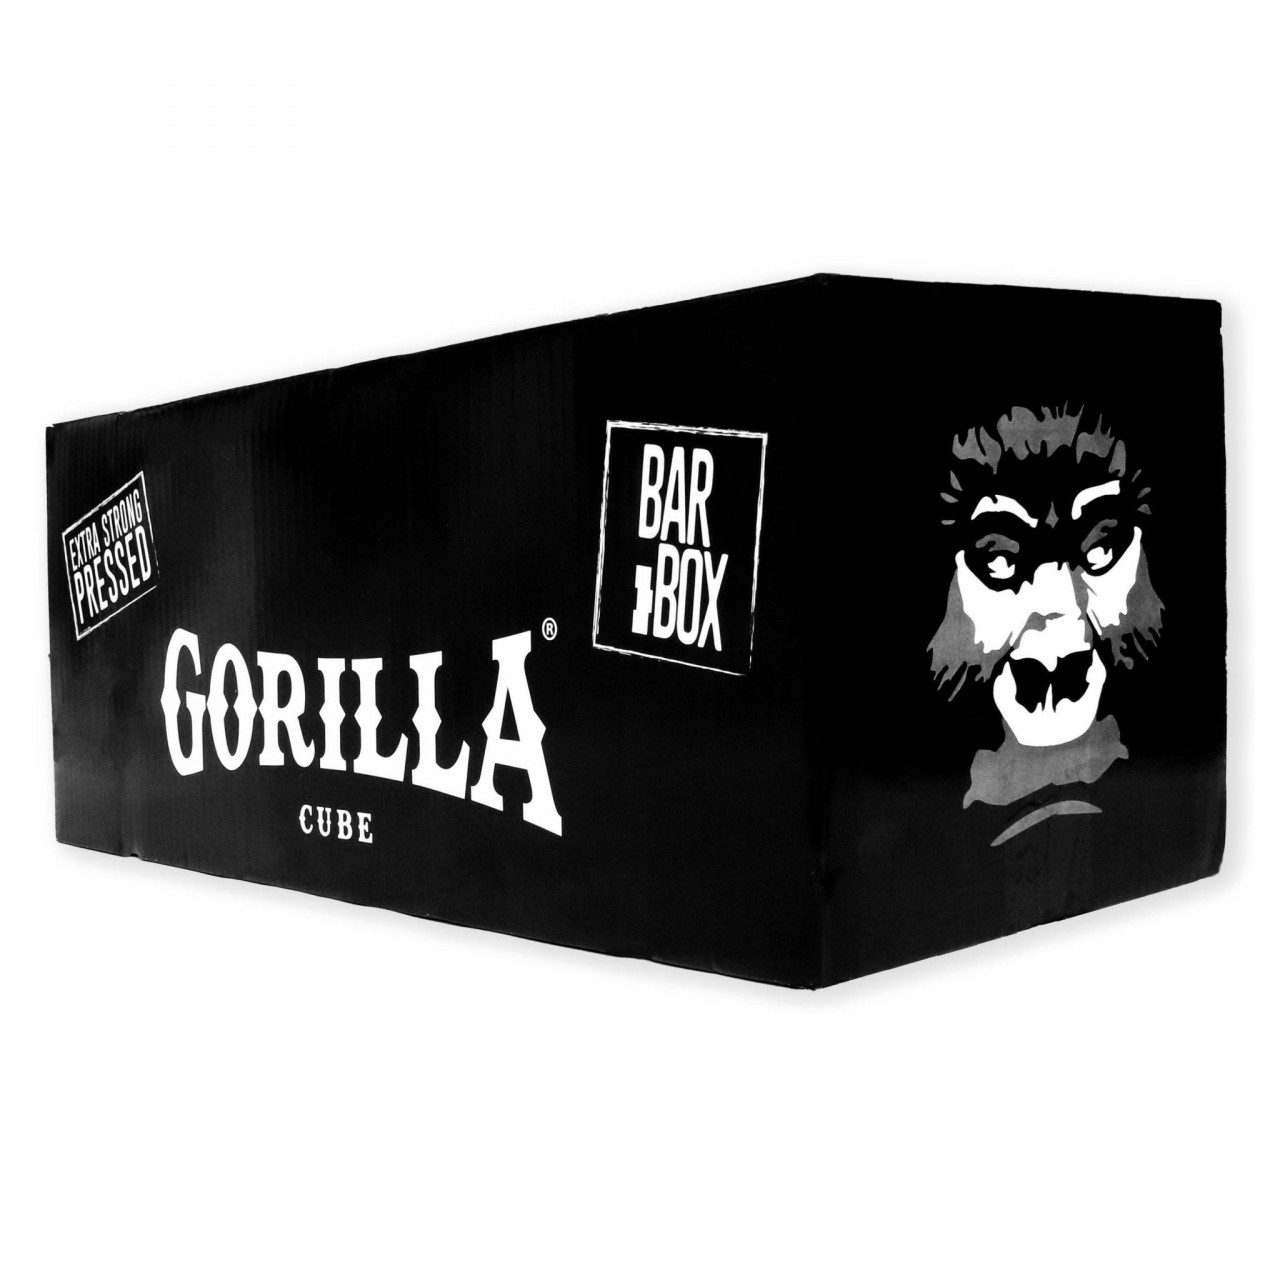 Gorilla Cube 26er Bar Box 20Kg